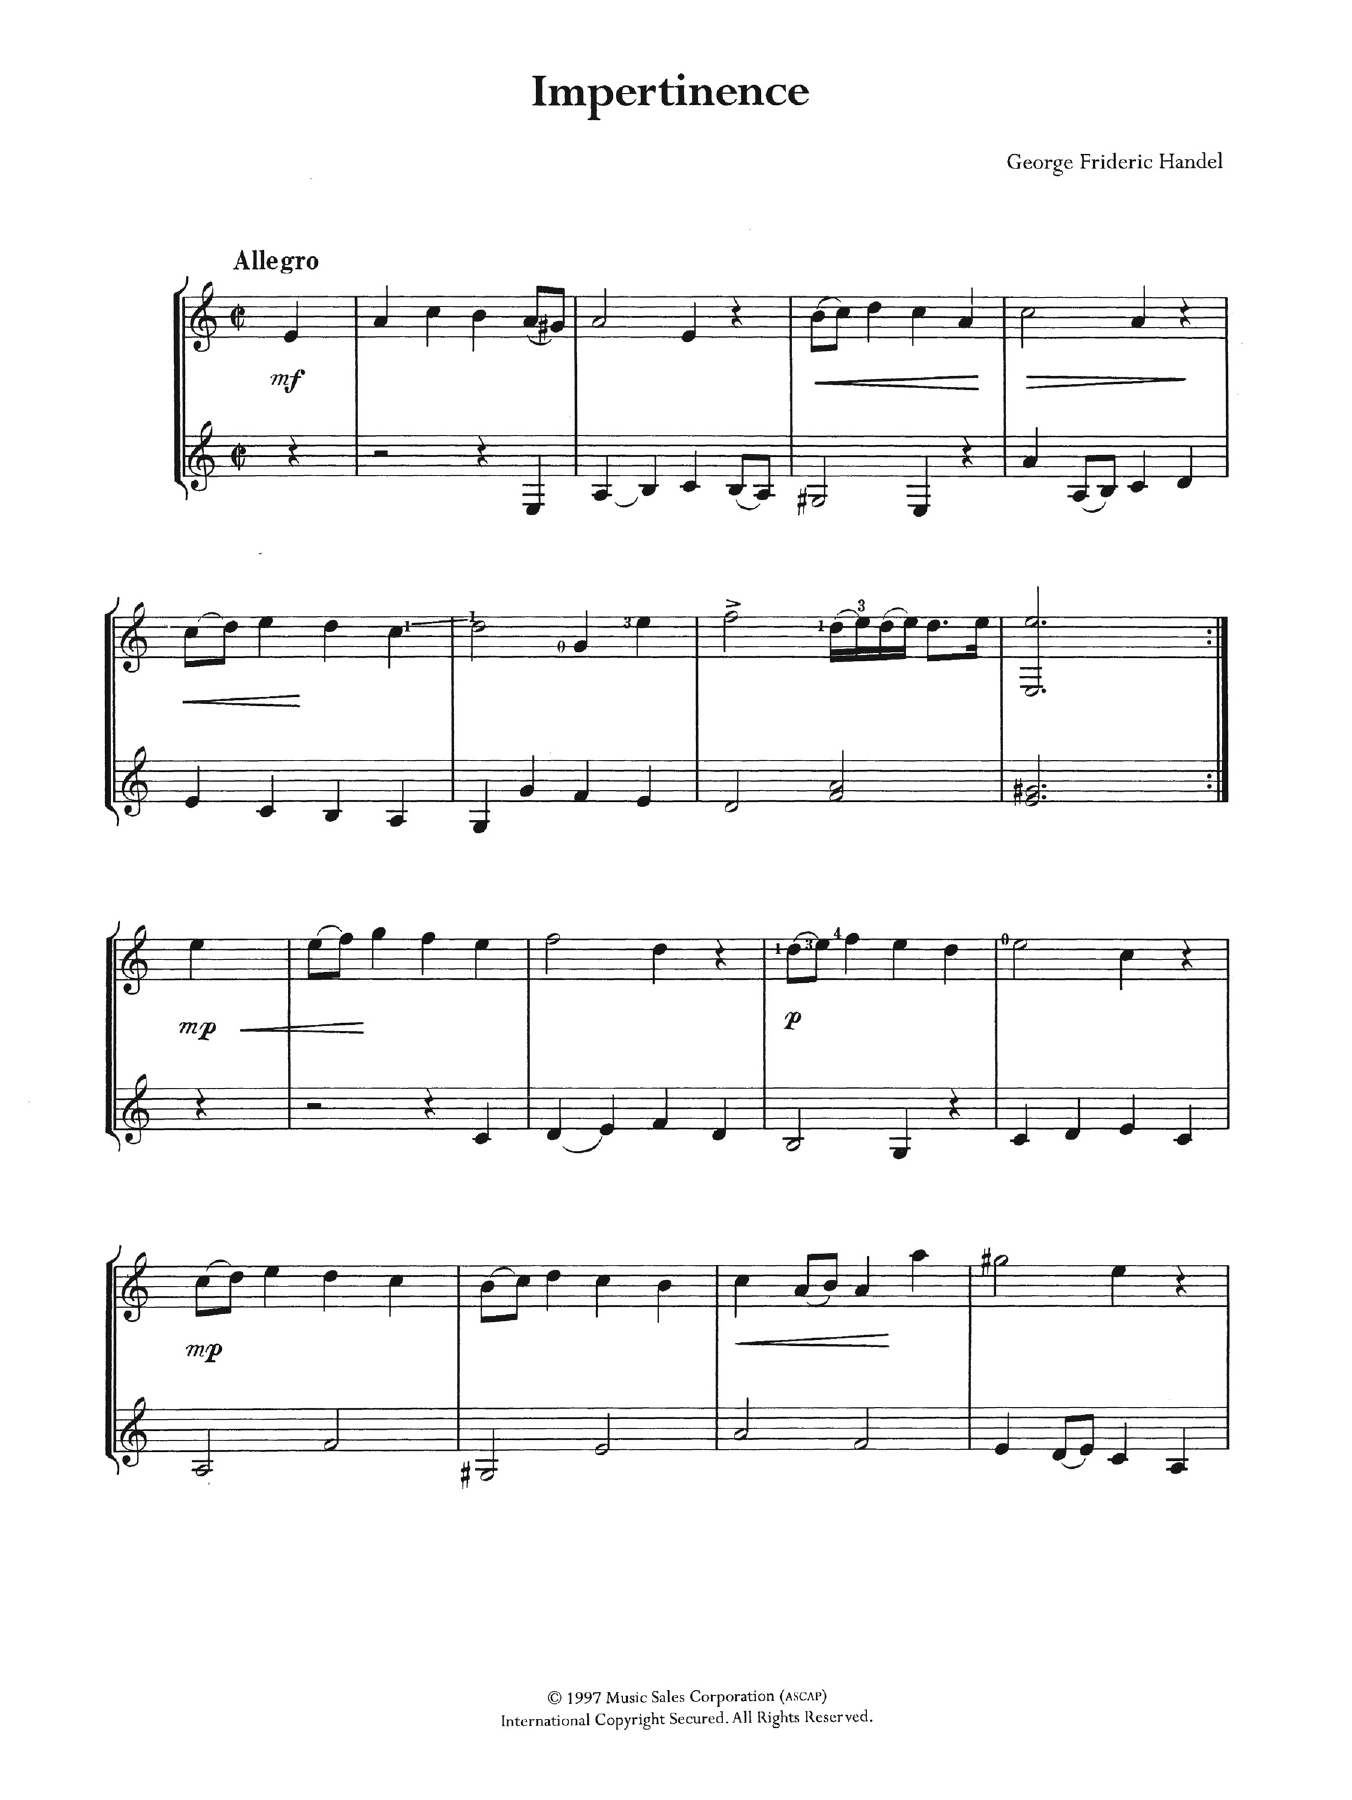 Download George Frideric Handel Impertinence Sheet Music